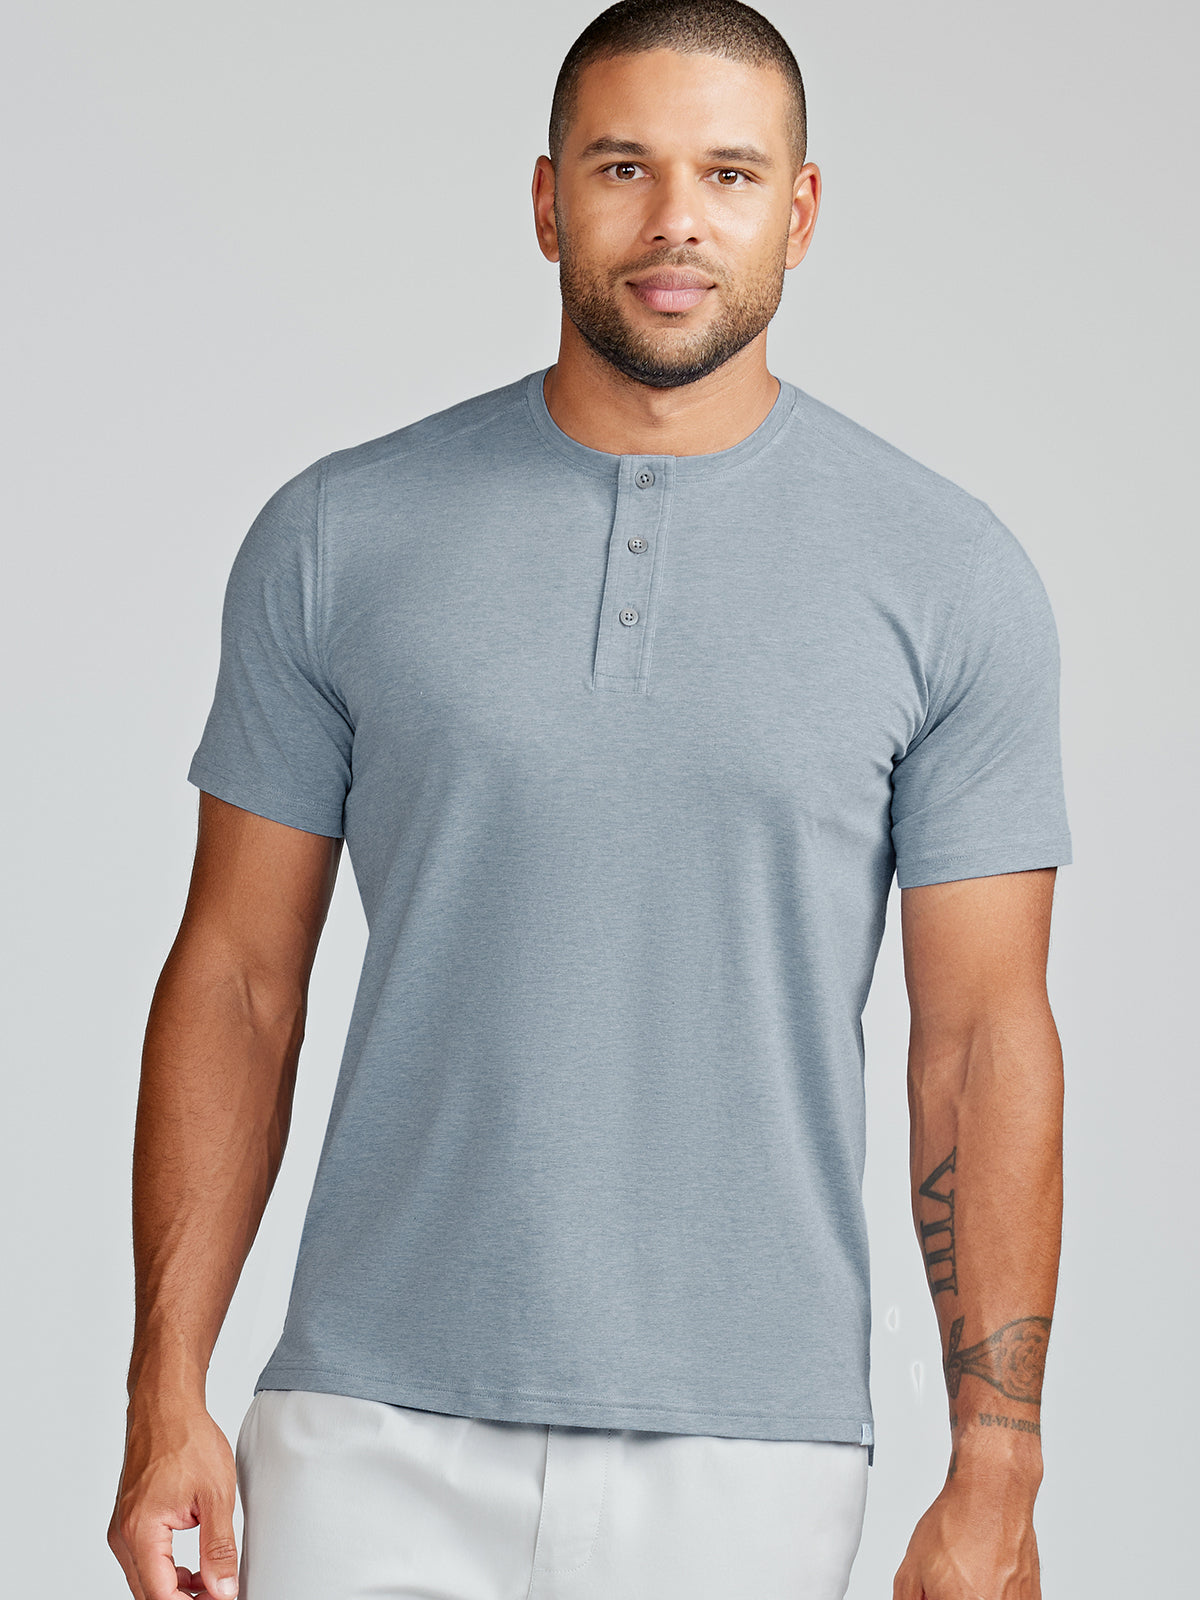 Xersion Men's Shirt Medium Long Sleeve Pullover Quick Dri Train Gray Black